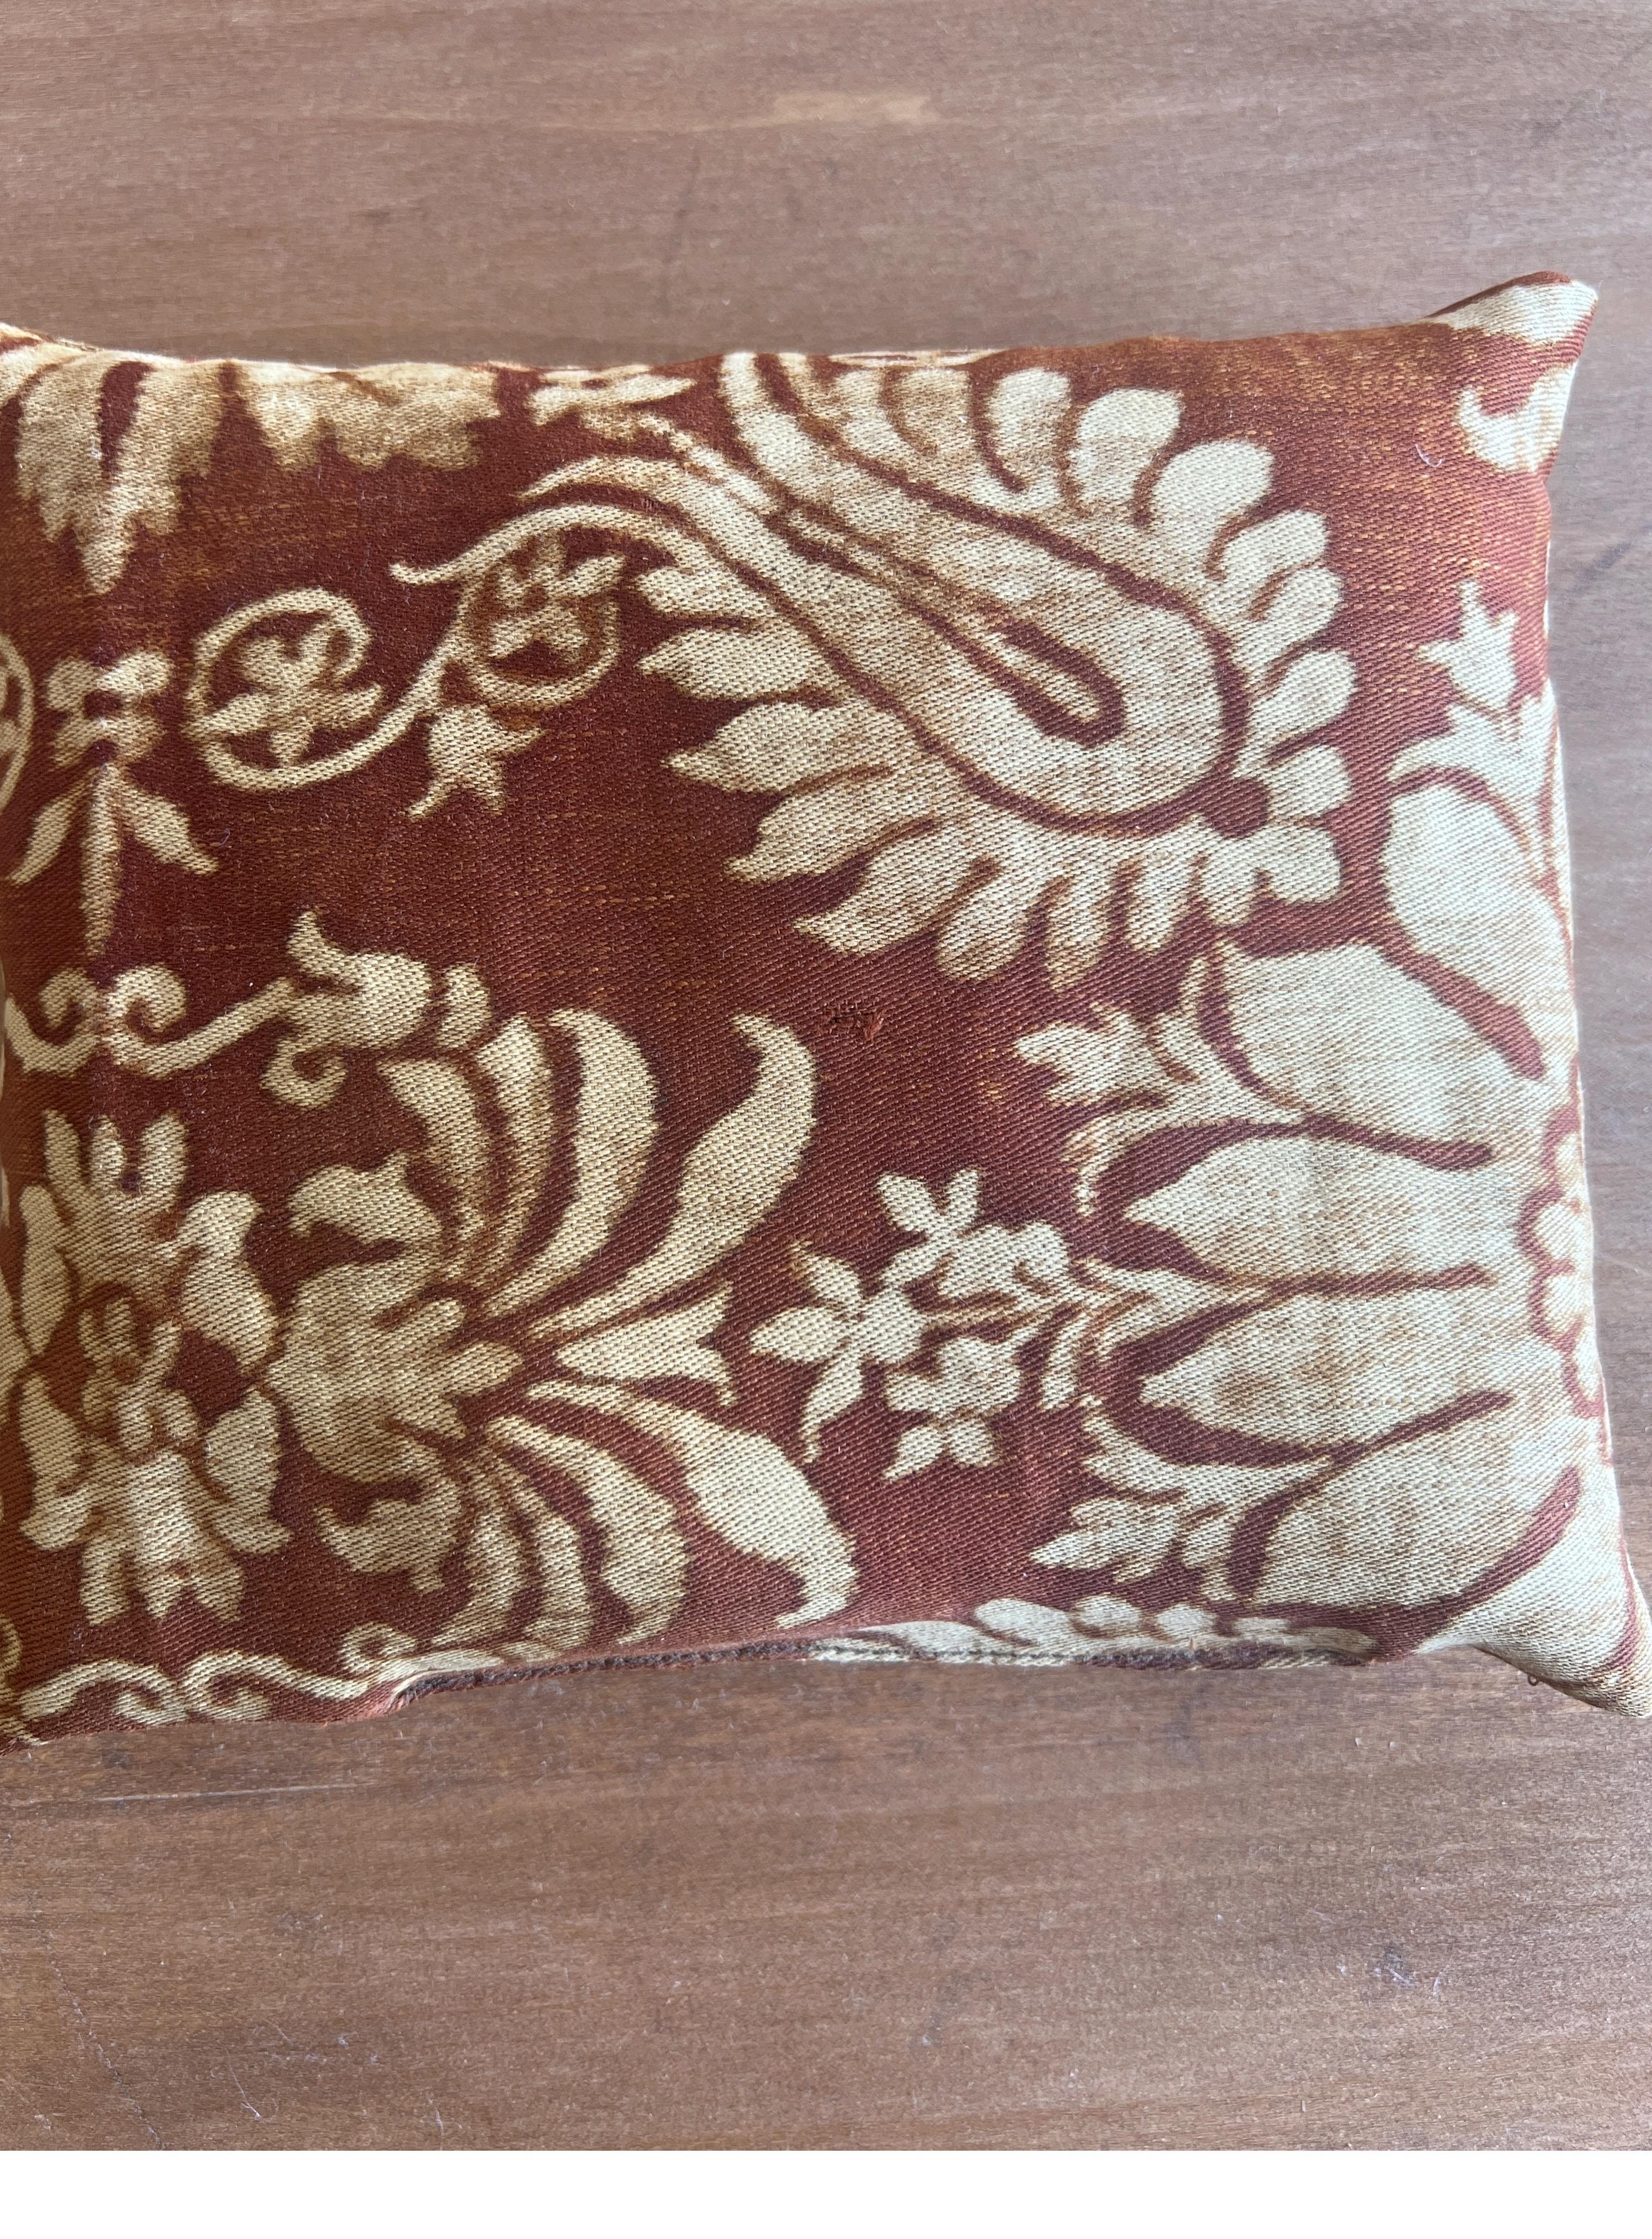 Lavender filled sachet made with original rare vintage Fortuny textile.